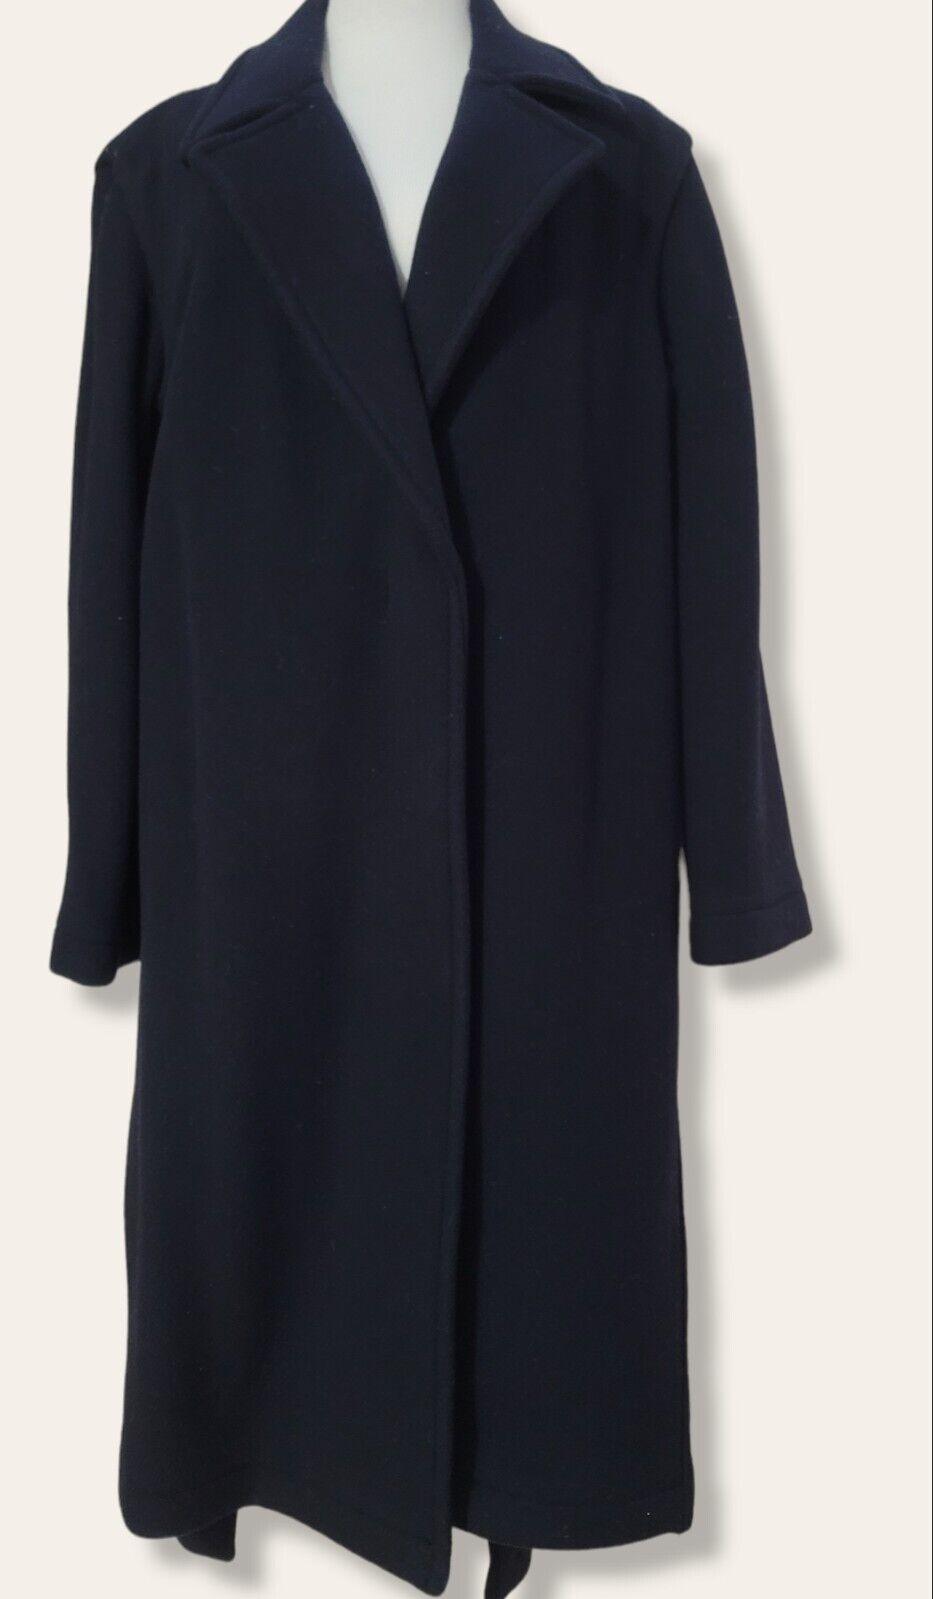 DKNY One Button Front Wool Blend Side Slits Overcoat Dark Navy Size S - SVNYFancy